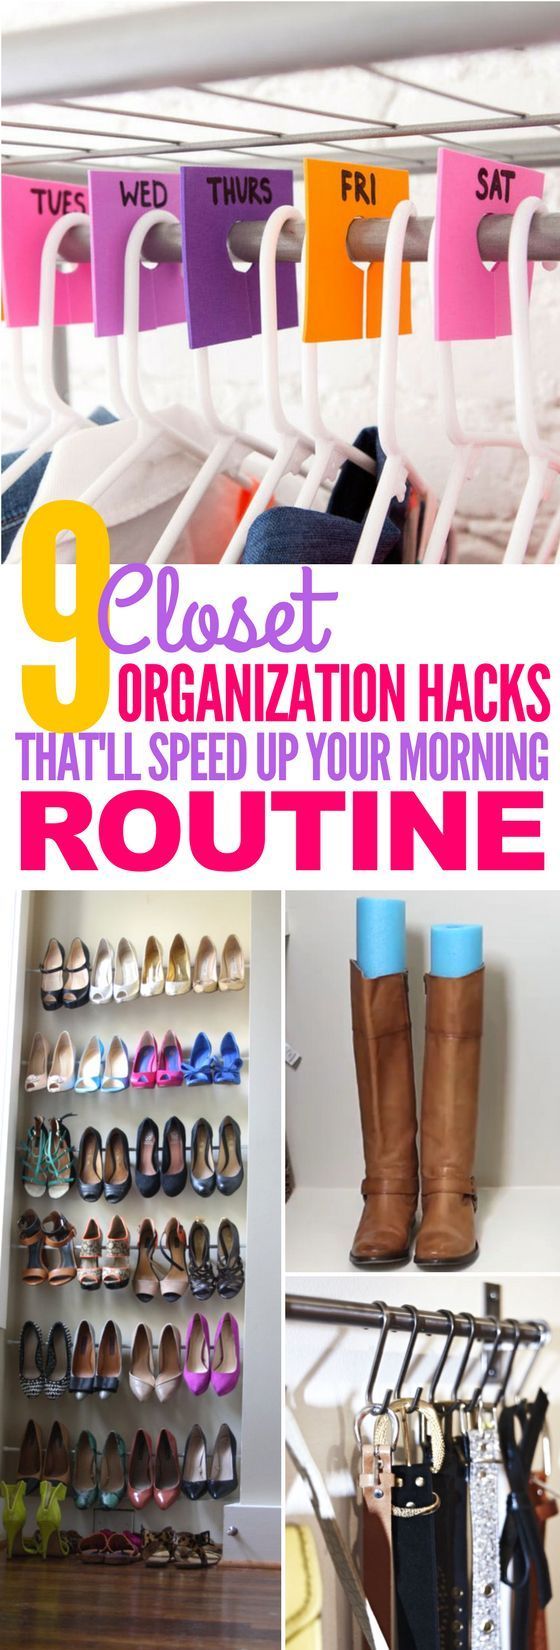 Closet Organization Ideas: 9 Ways to Store Your Clothing -   24 diy closet hacks
 ideas